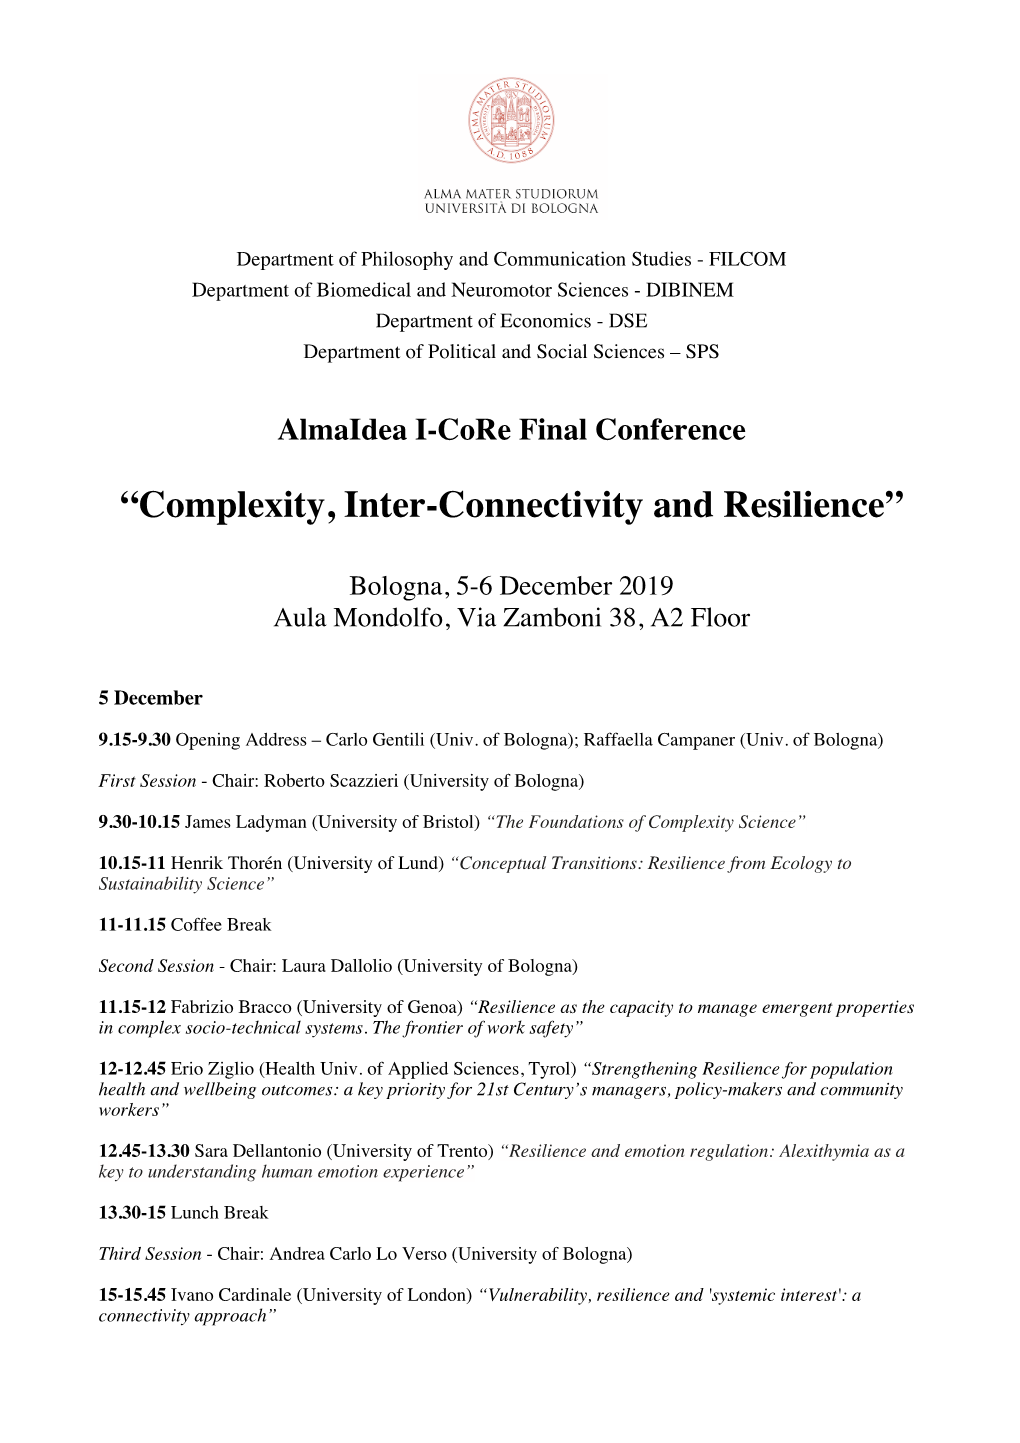 I-CORE Final Conference Program